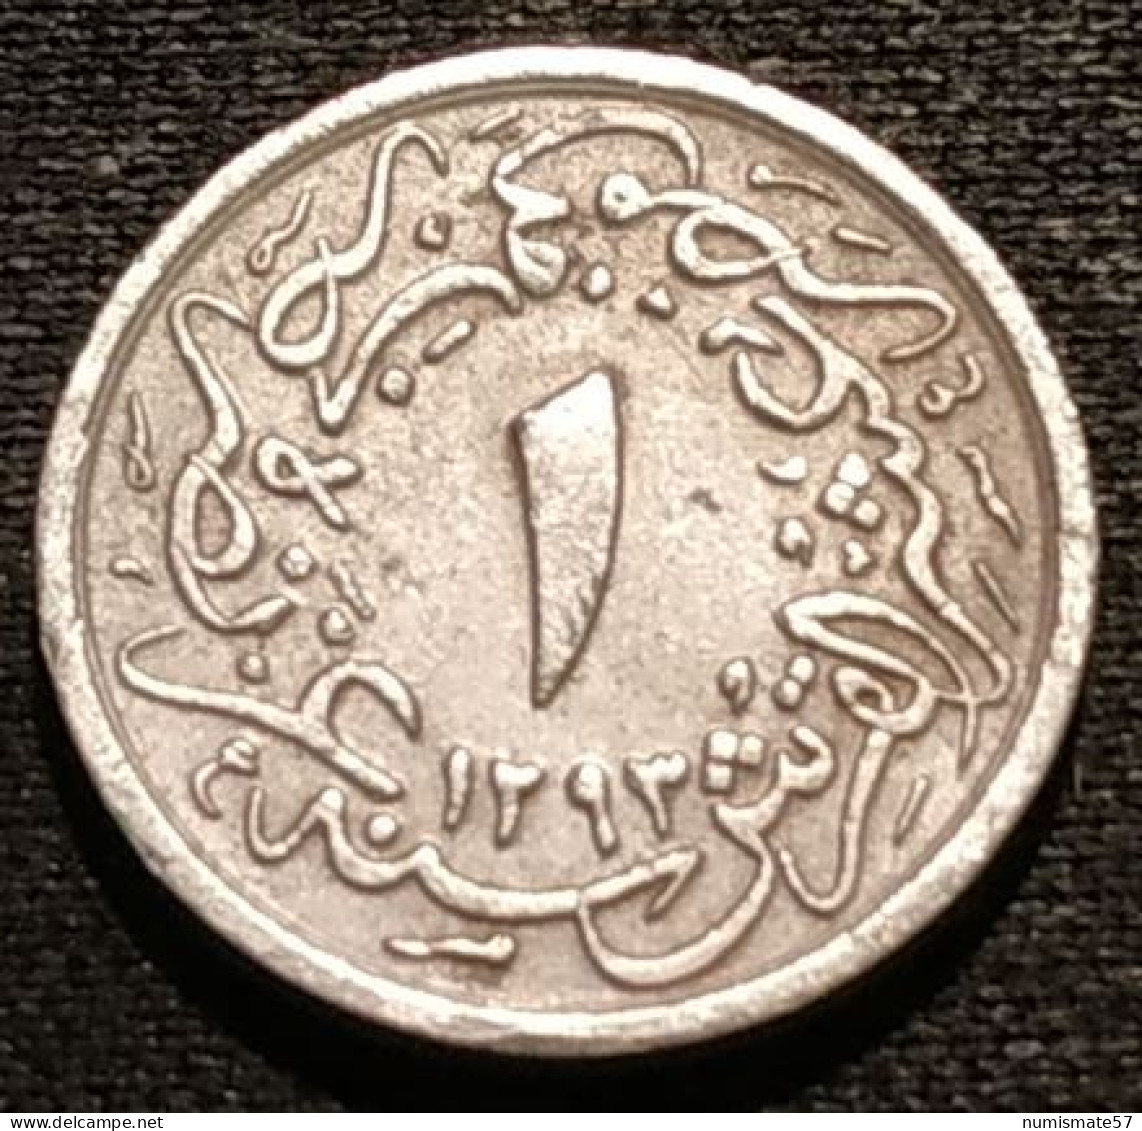 EGYPTE - EGYPT - 1/10 QIRSH 1886 ( 1293 - 12 ) - KM 289 - ( Abdul Hamid II ) - Aegypten